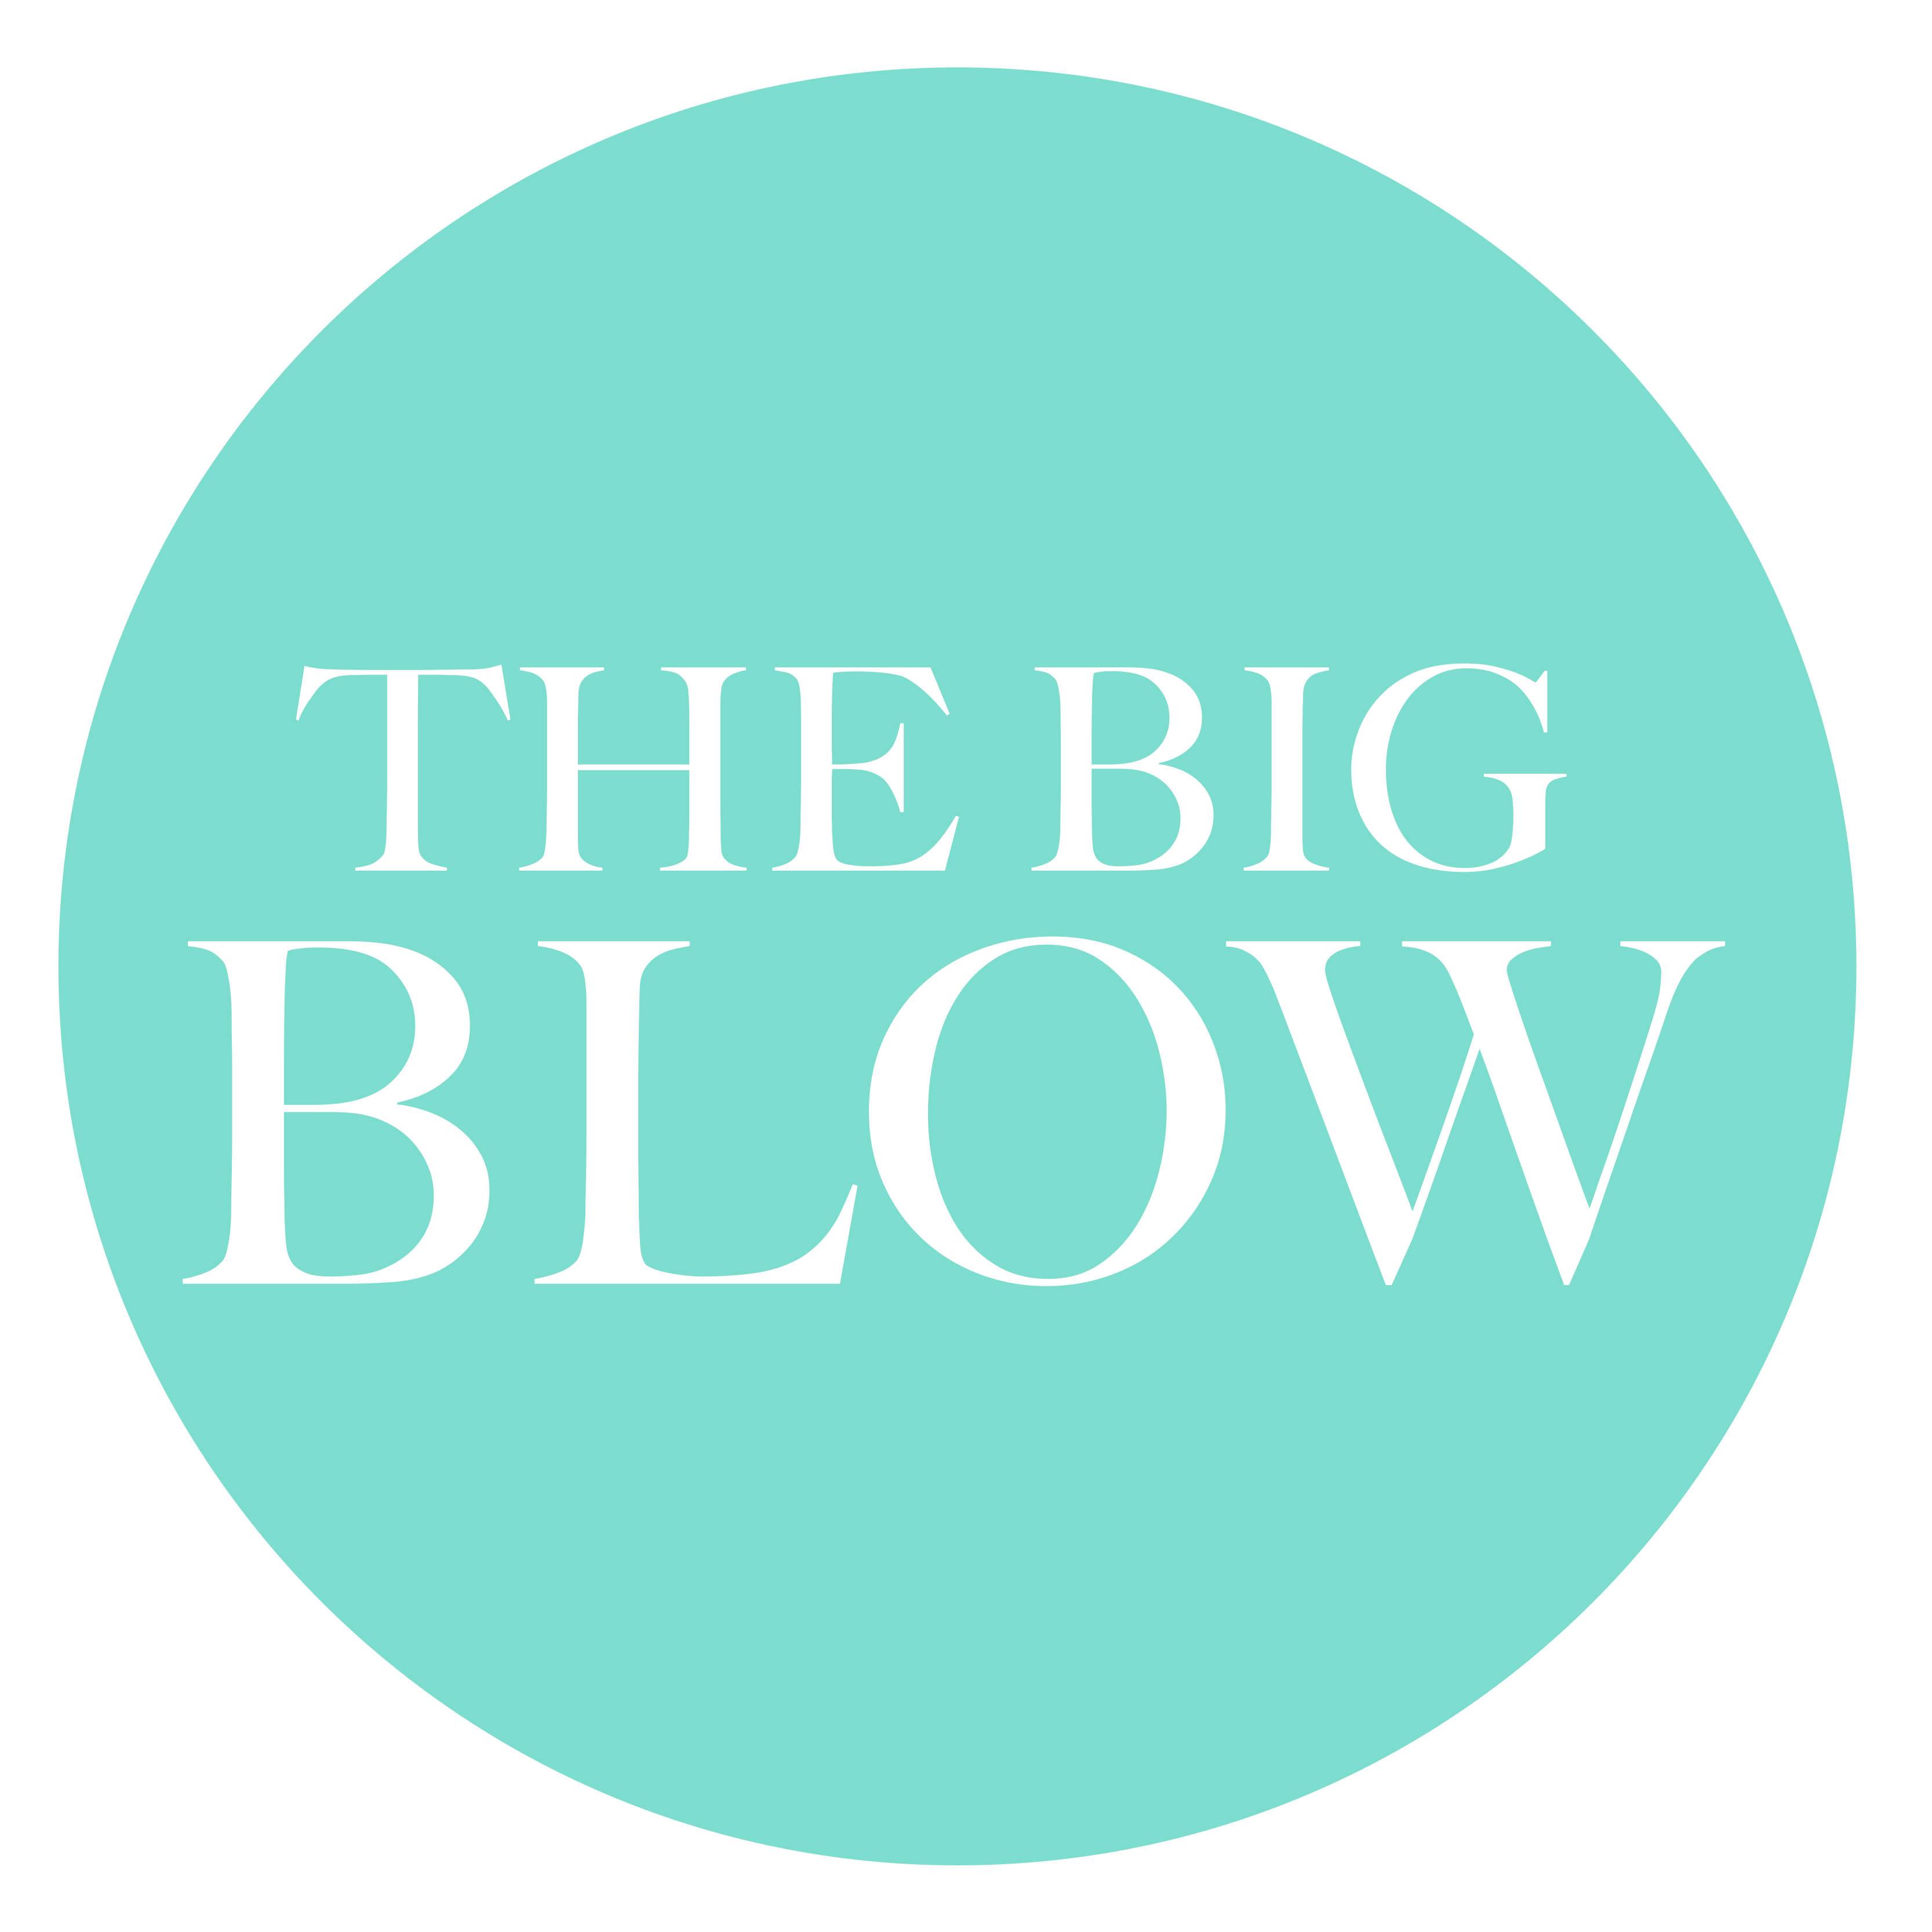 The Big Blow